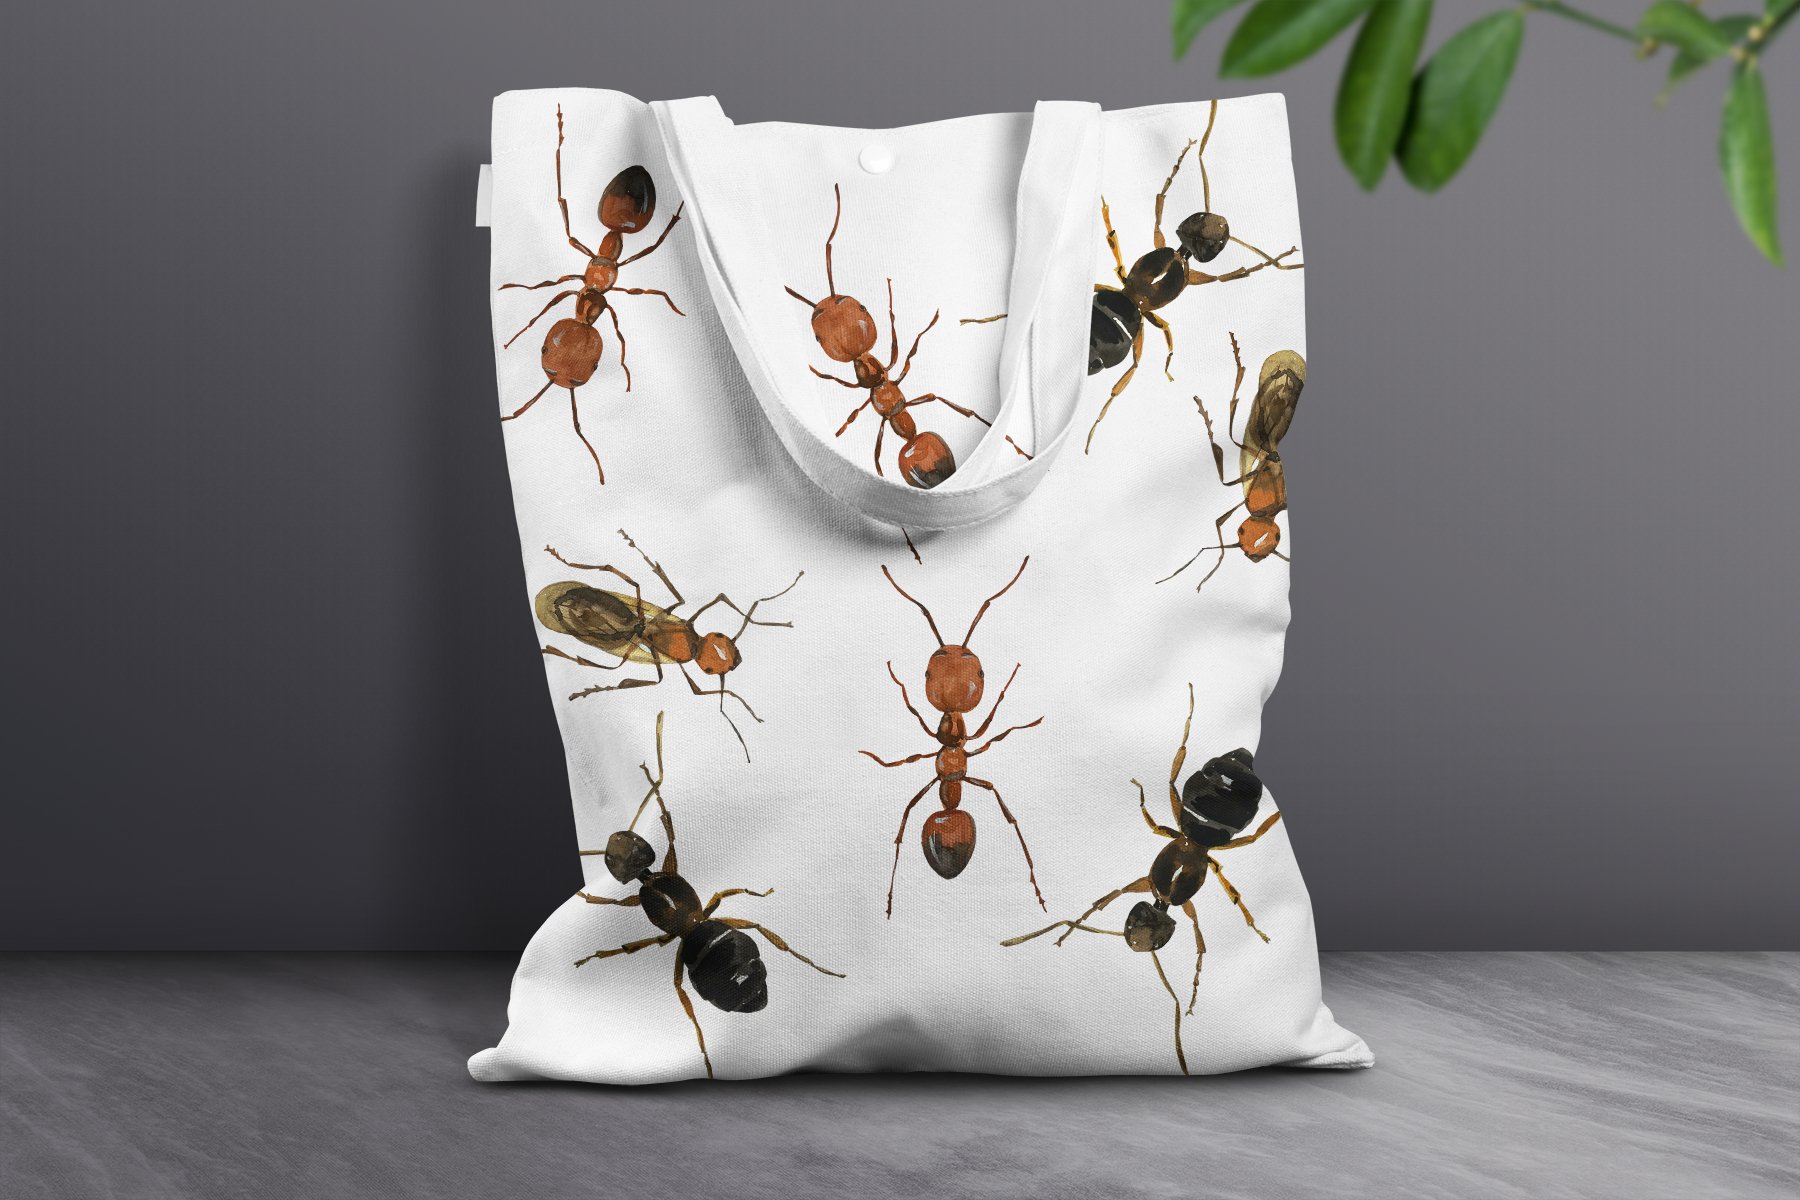 Ant life cycle on the eco bag.